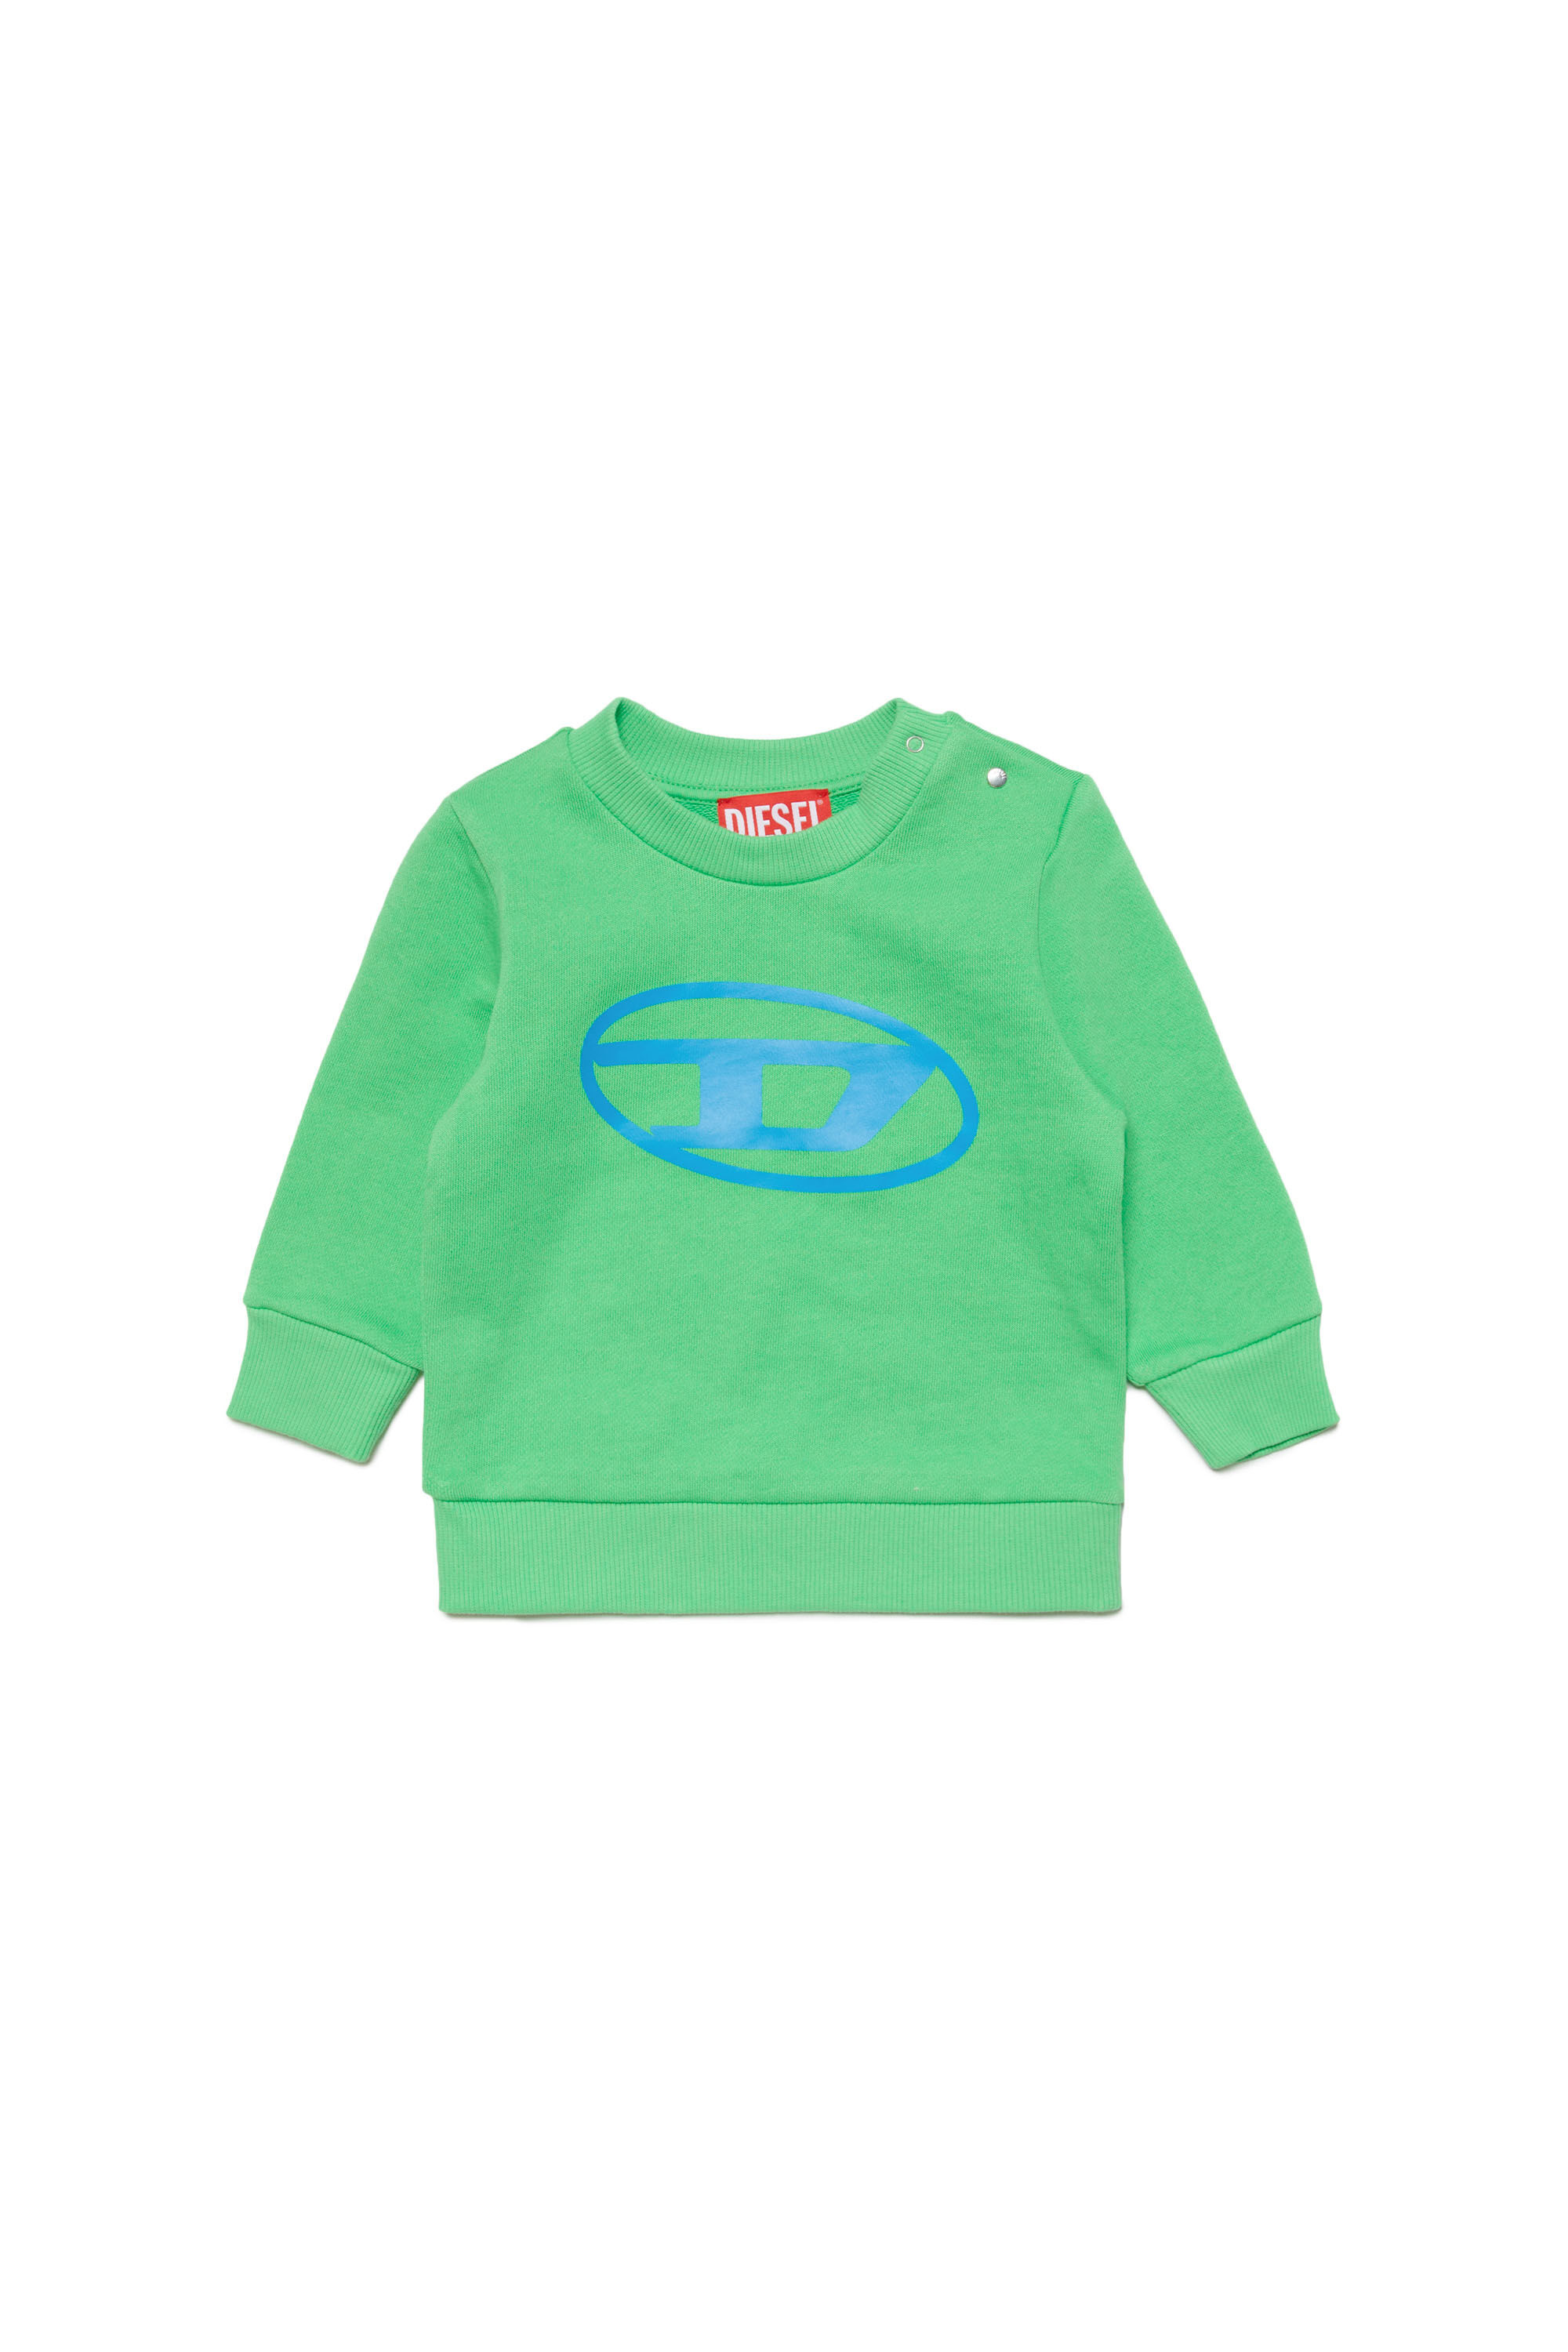 Diesel - SCERB, Unisex Cotton sweatshirt with Oval D in Green - Image 1